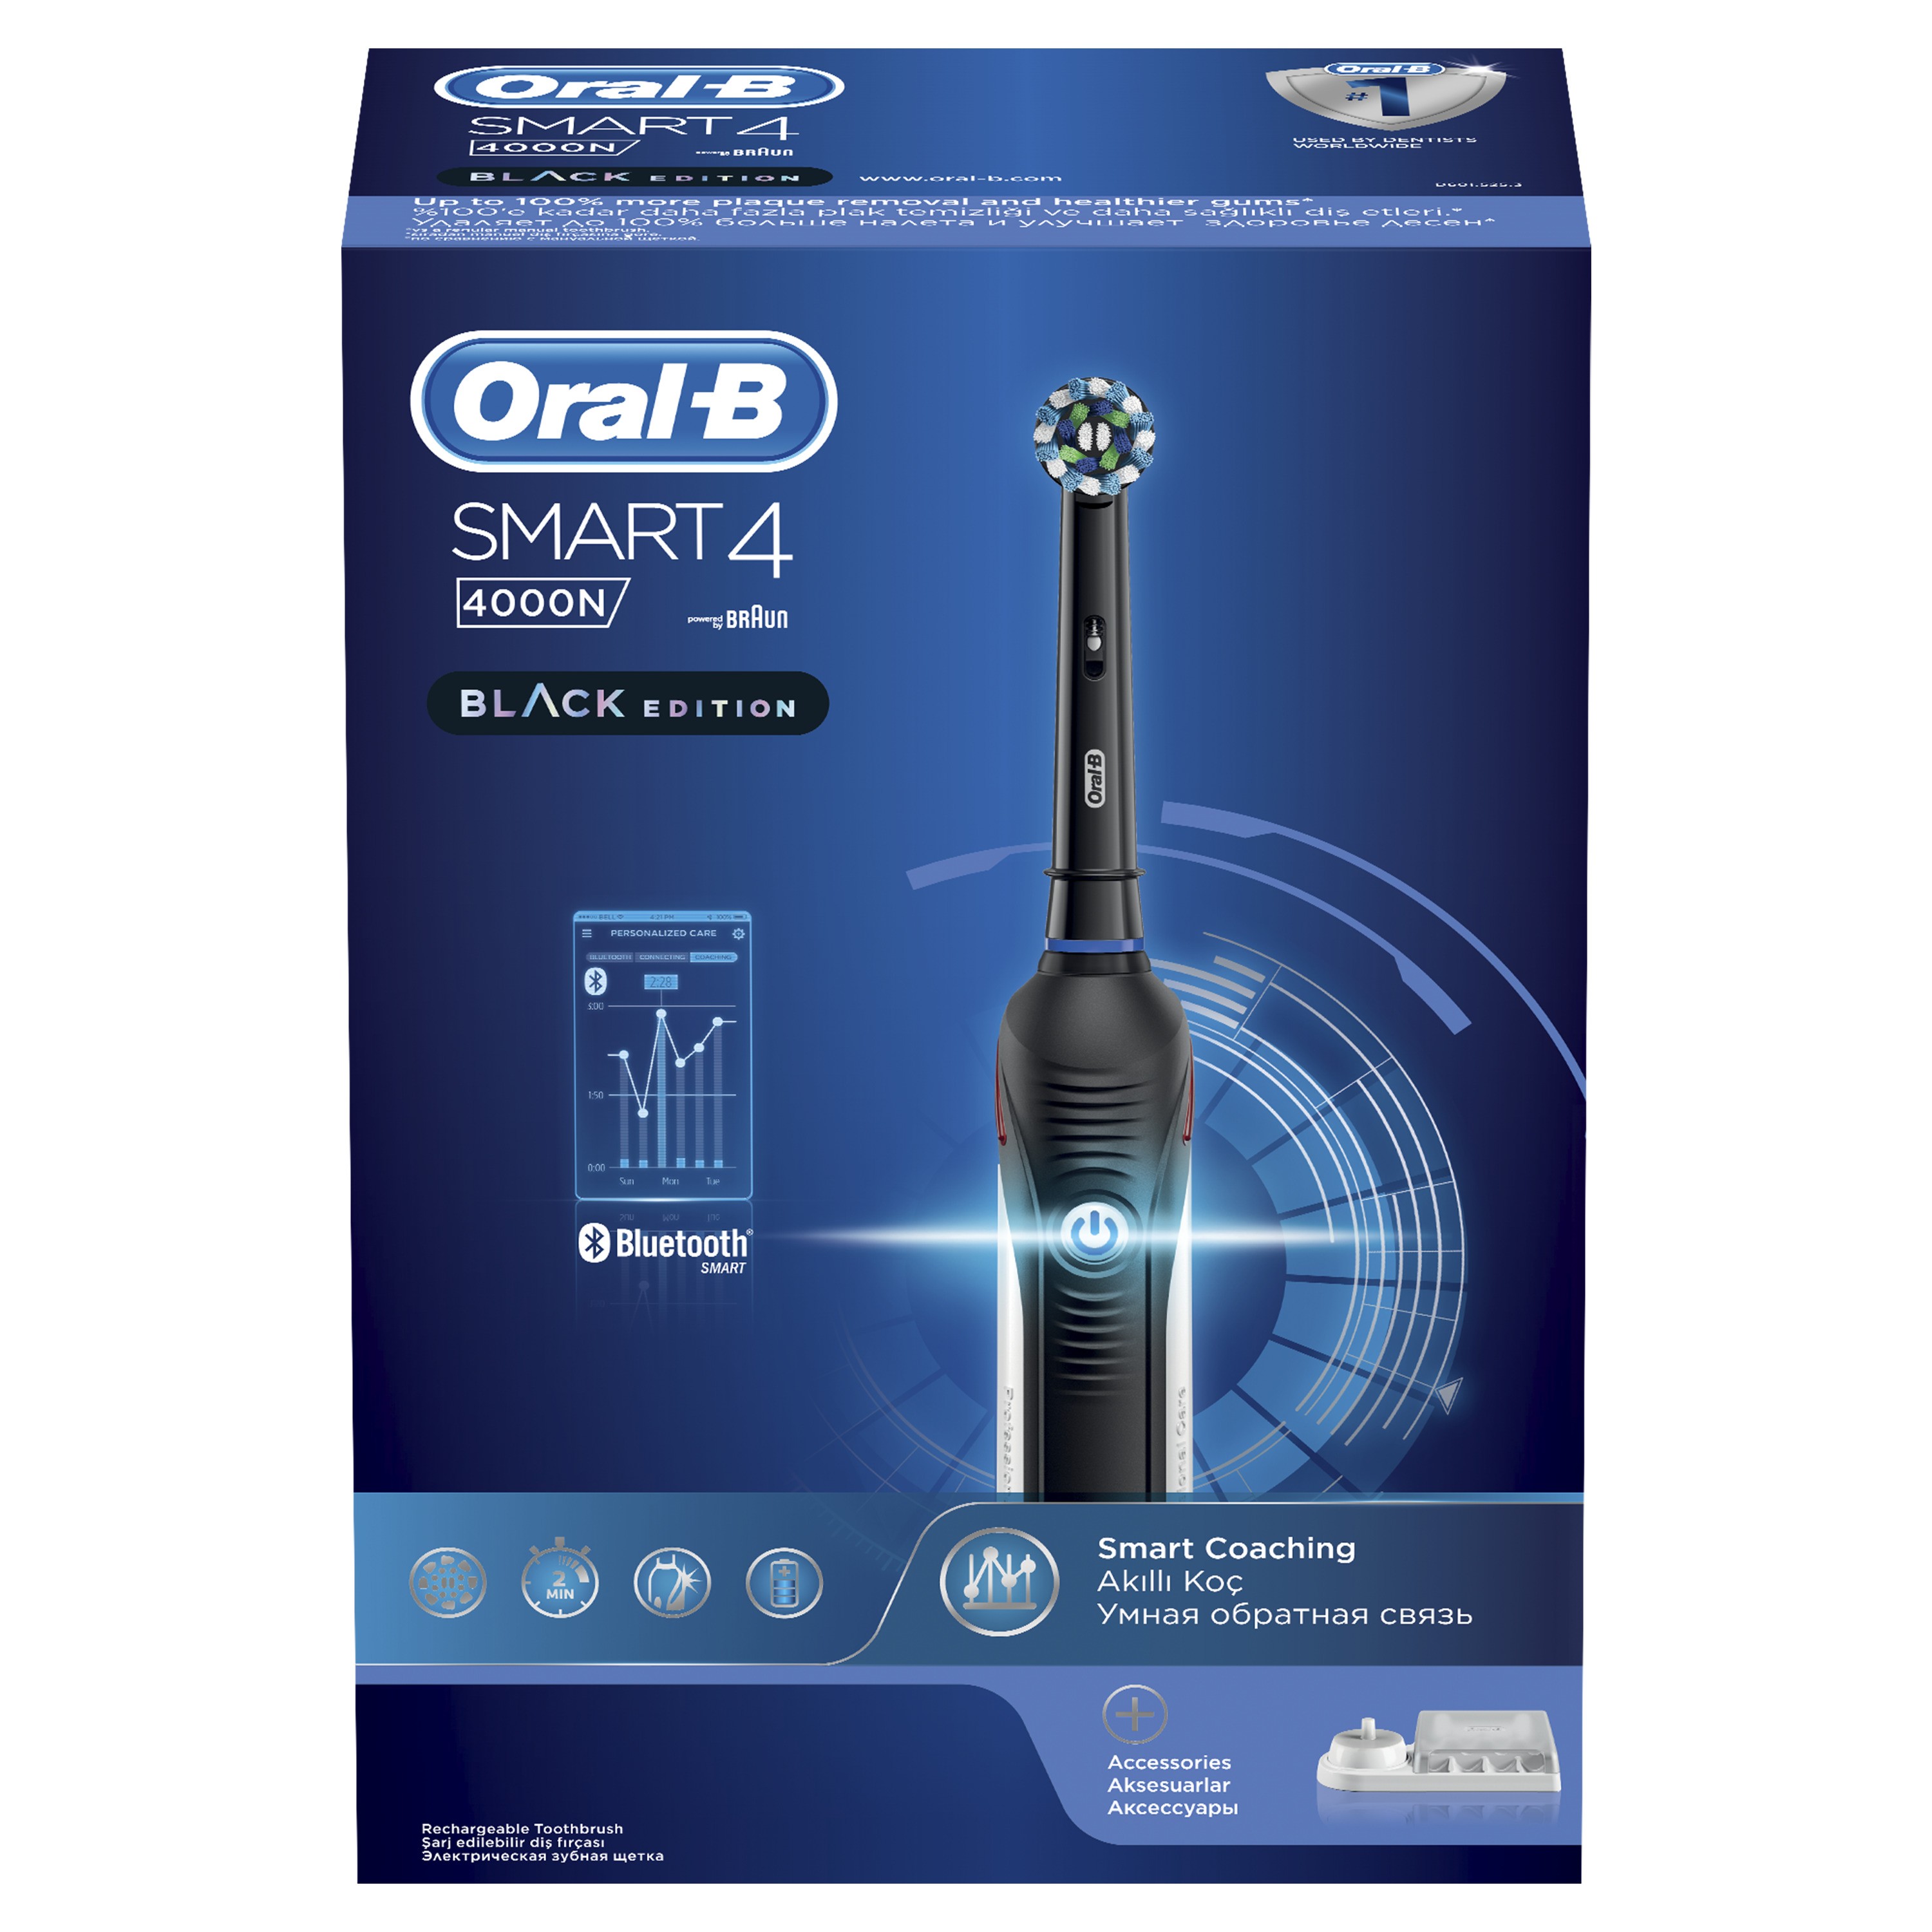 фото Зубная щетка электрическая braun oral-b smart 4 4000n